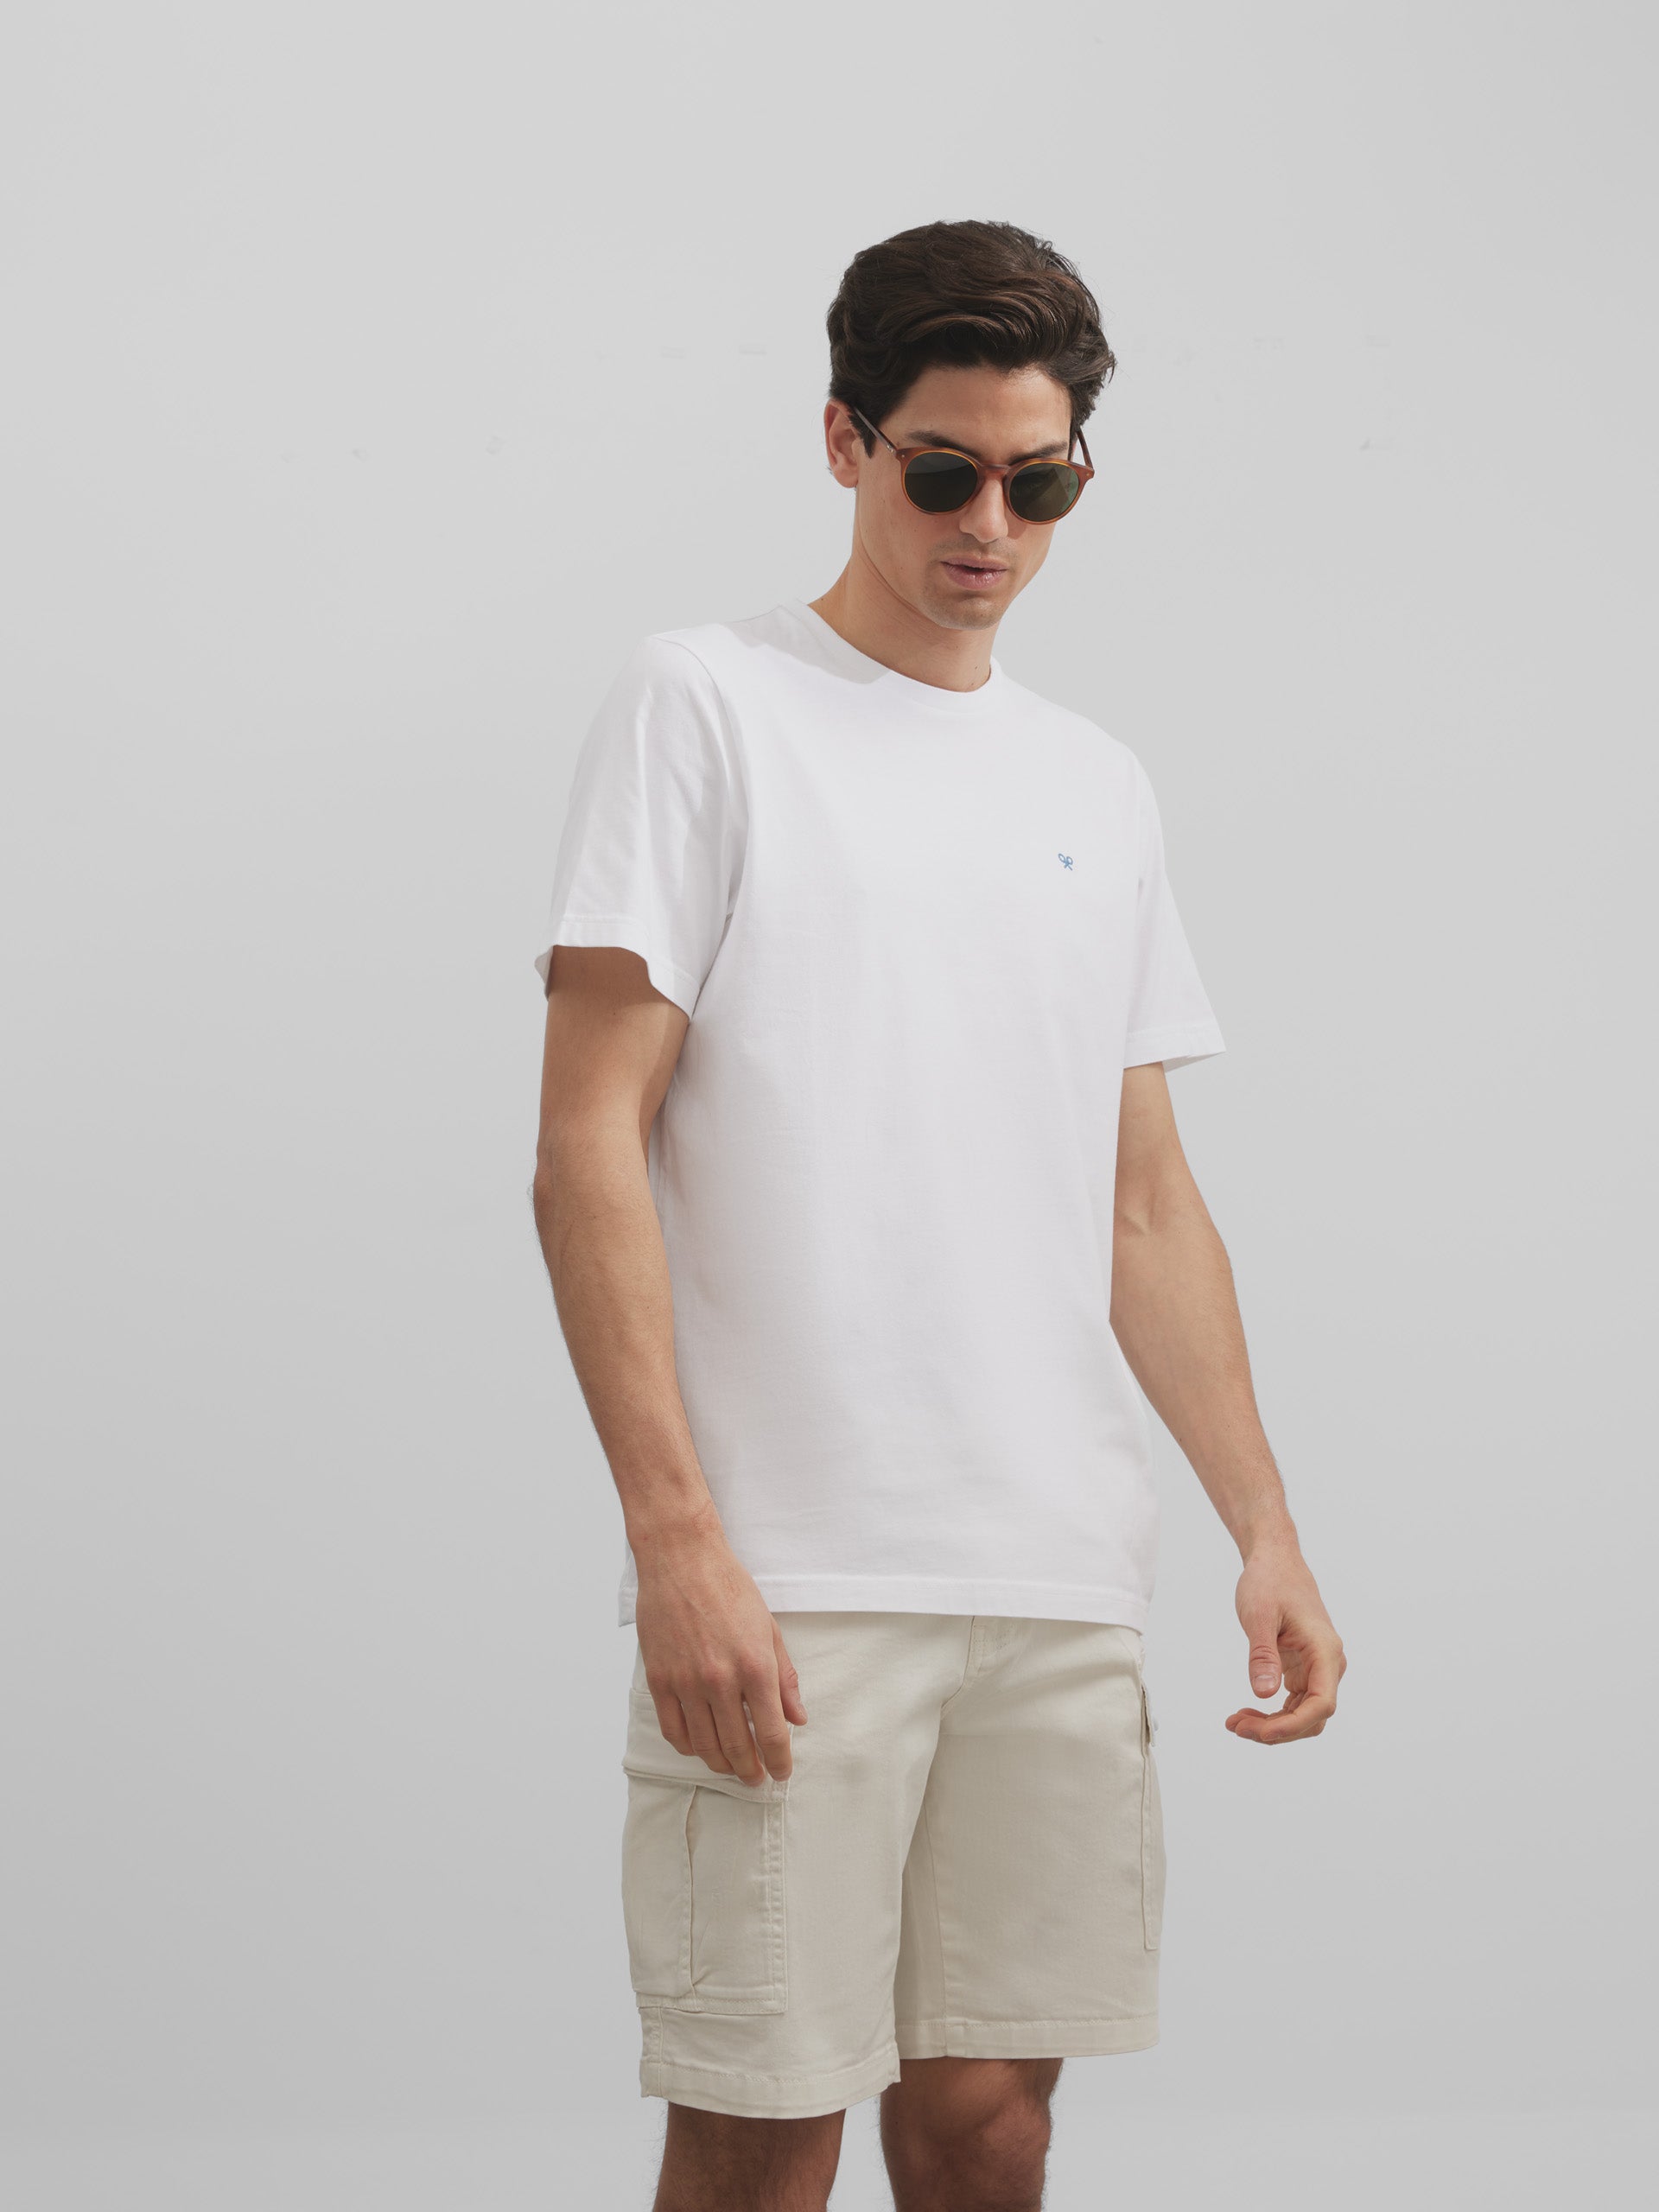 Camiseta sun coast blanca